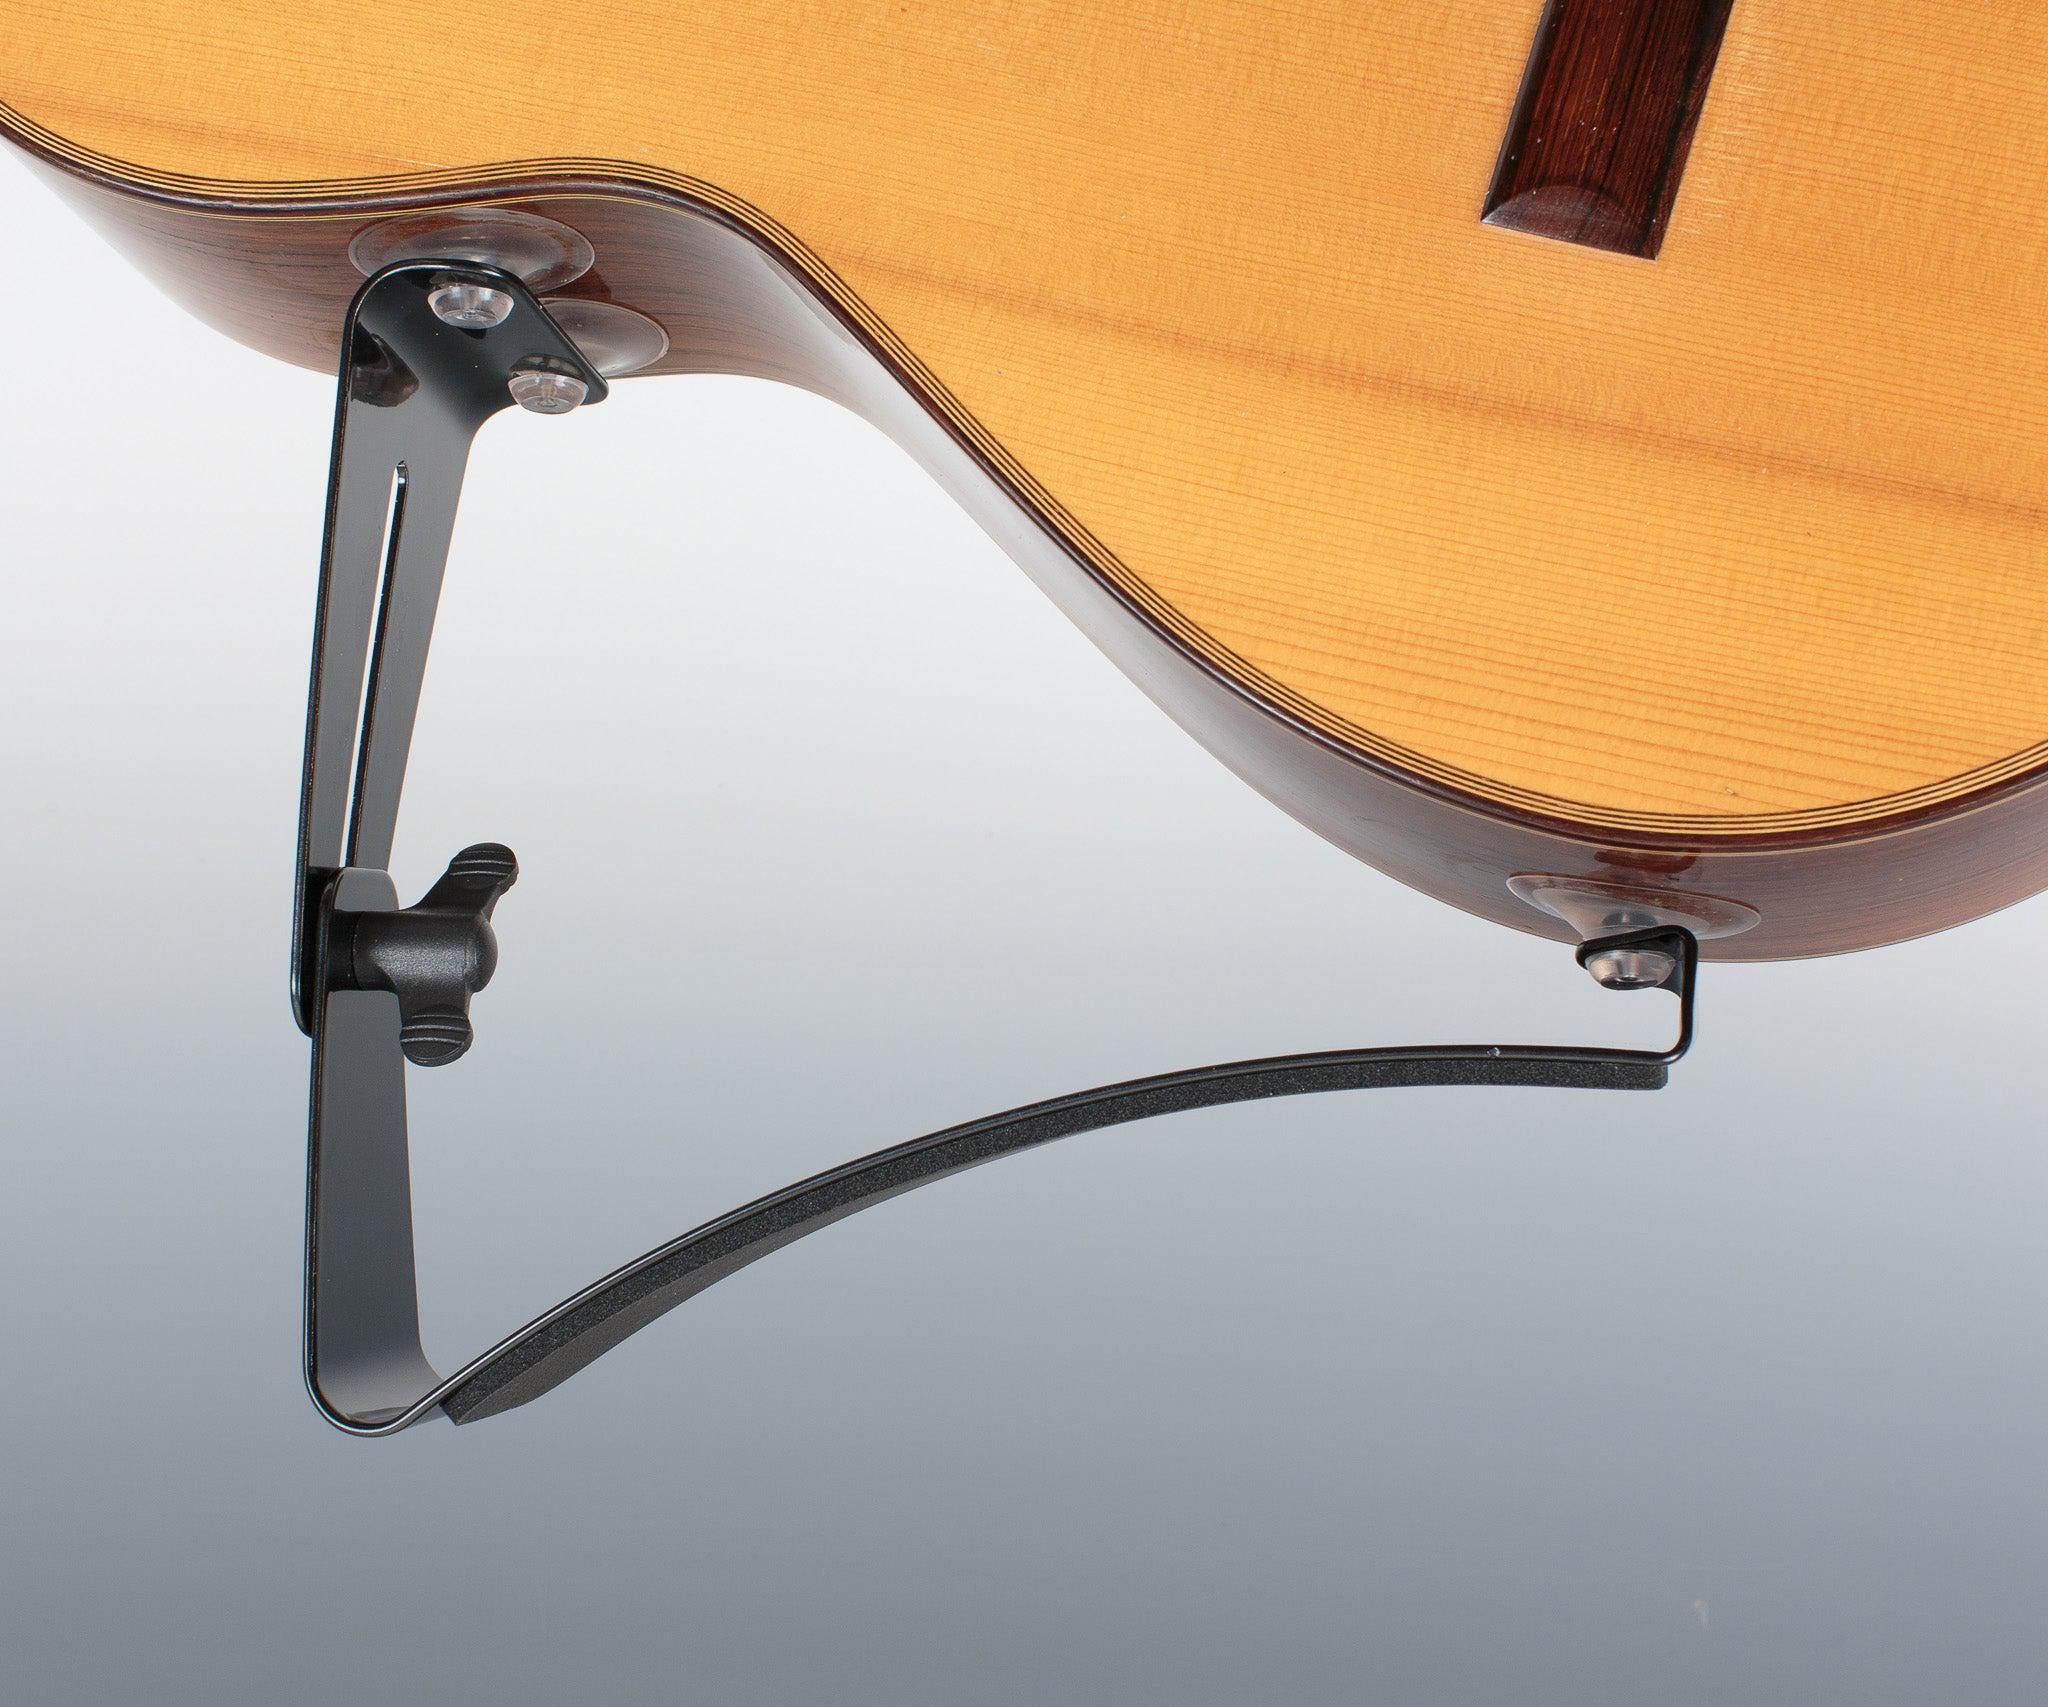 ErgoPlay Professional Guitar Support - Left-Handed